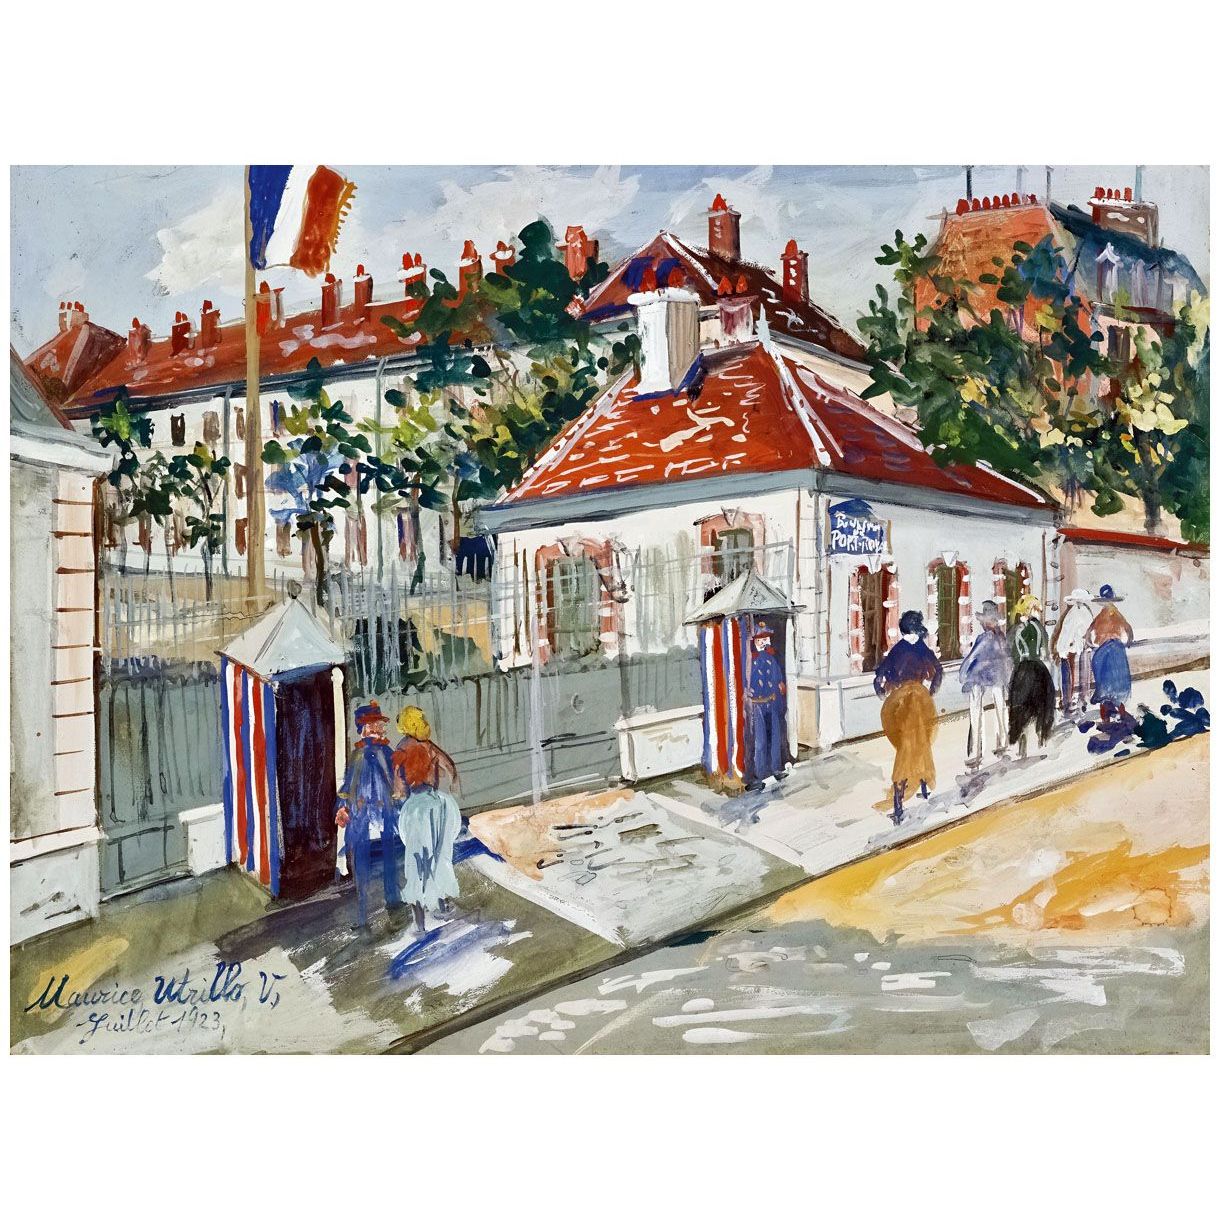 Maurice Utrillo. La caserne de boulevard Port-Royal. 1923. Private collection